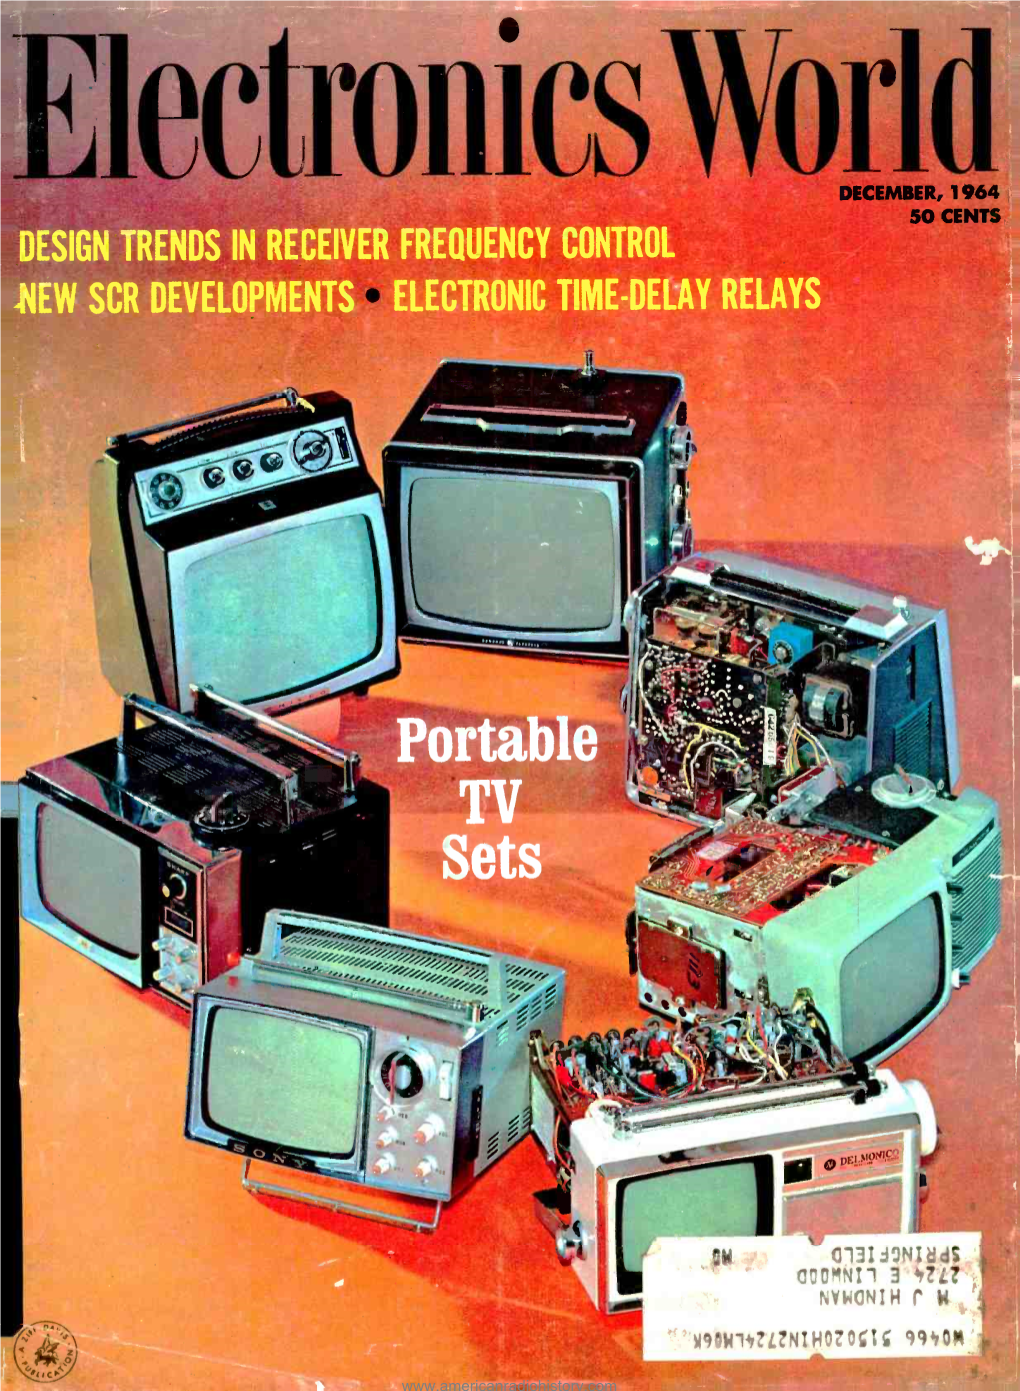 Portable TV Sets